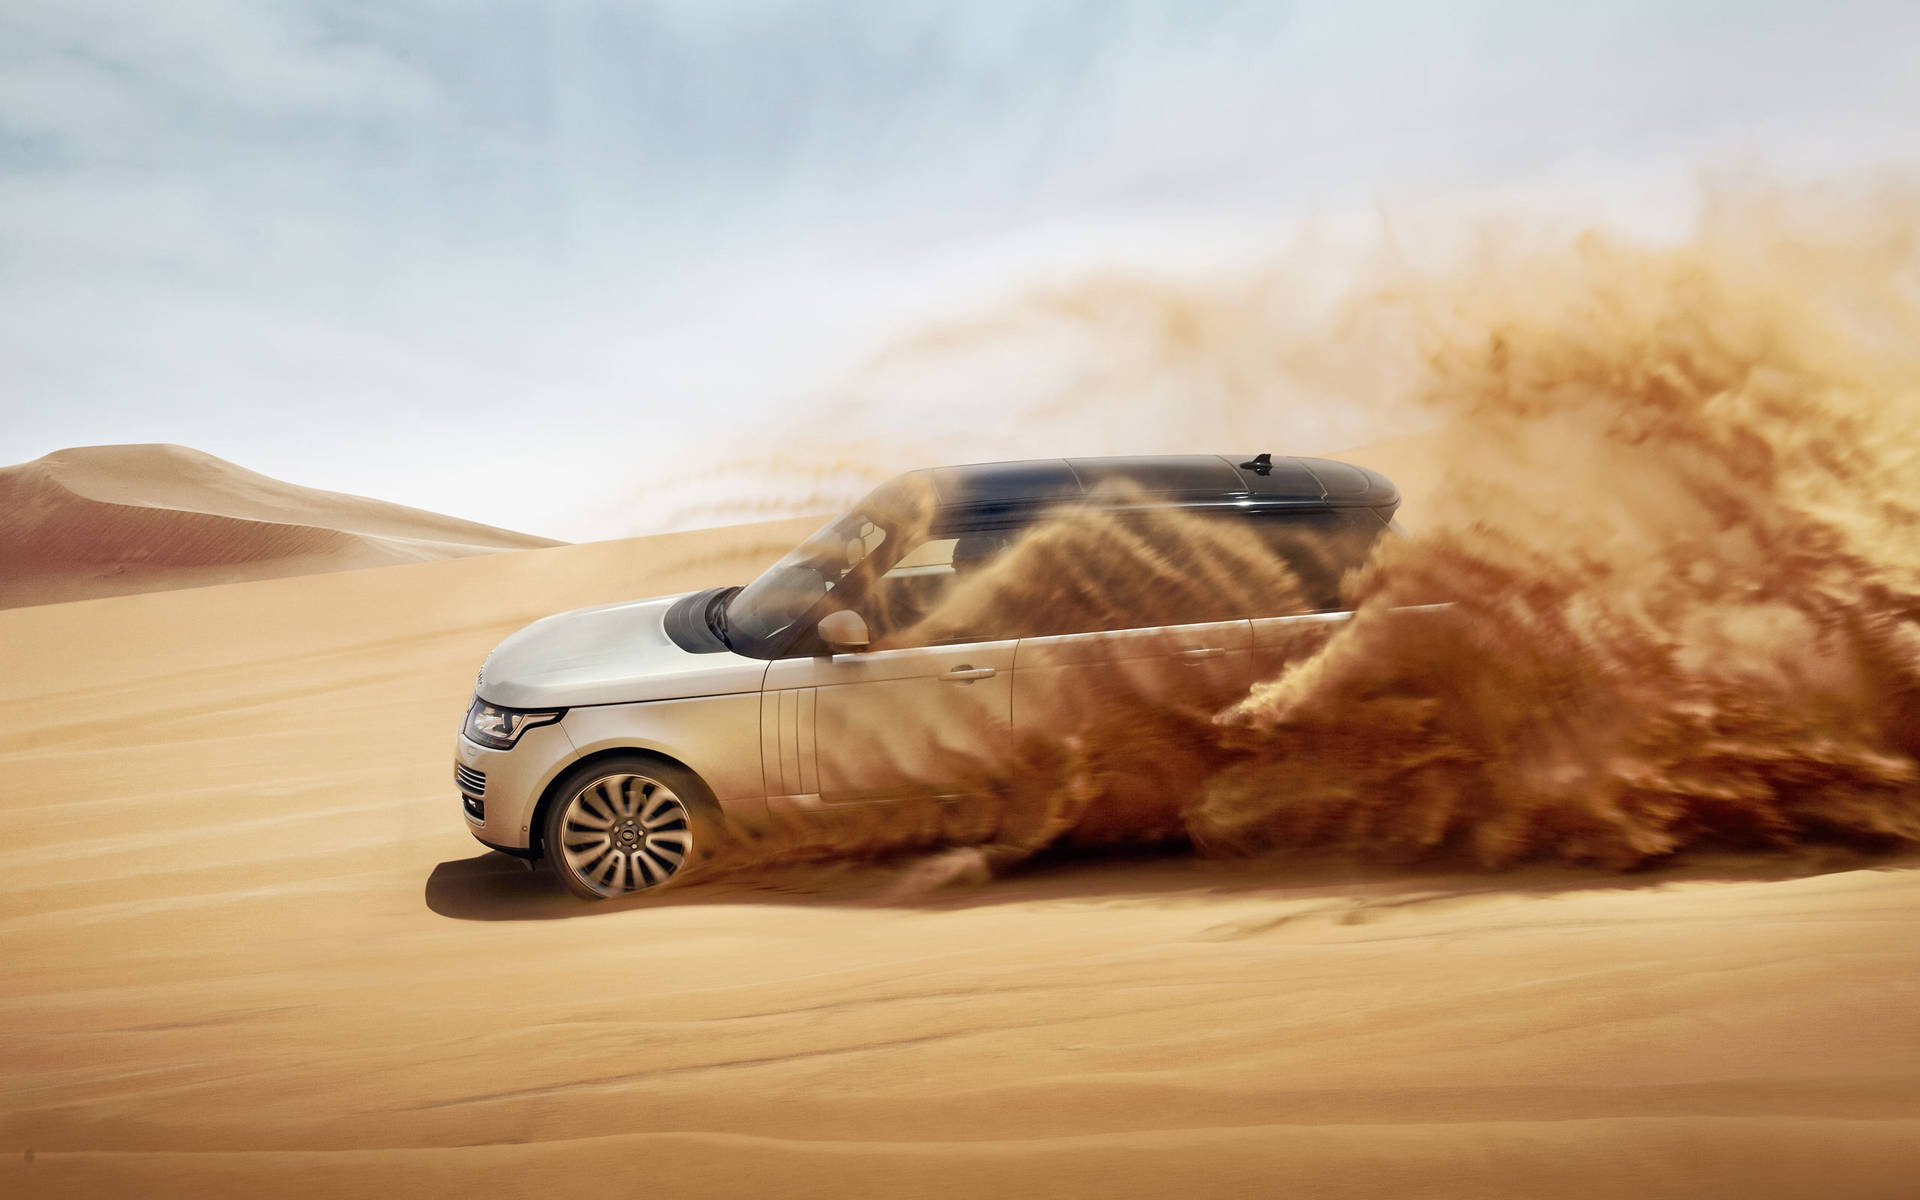 Silver Black Land Rover In Desert Background